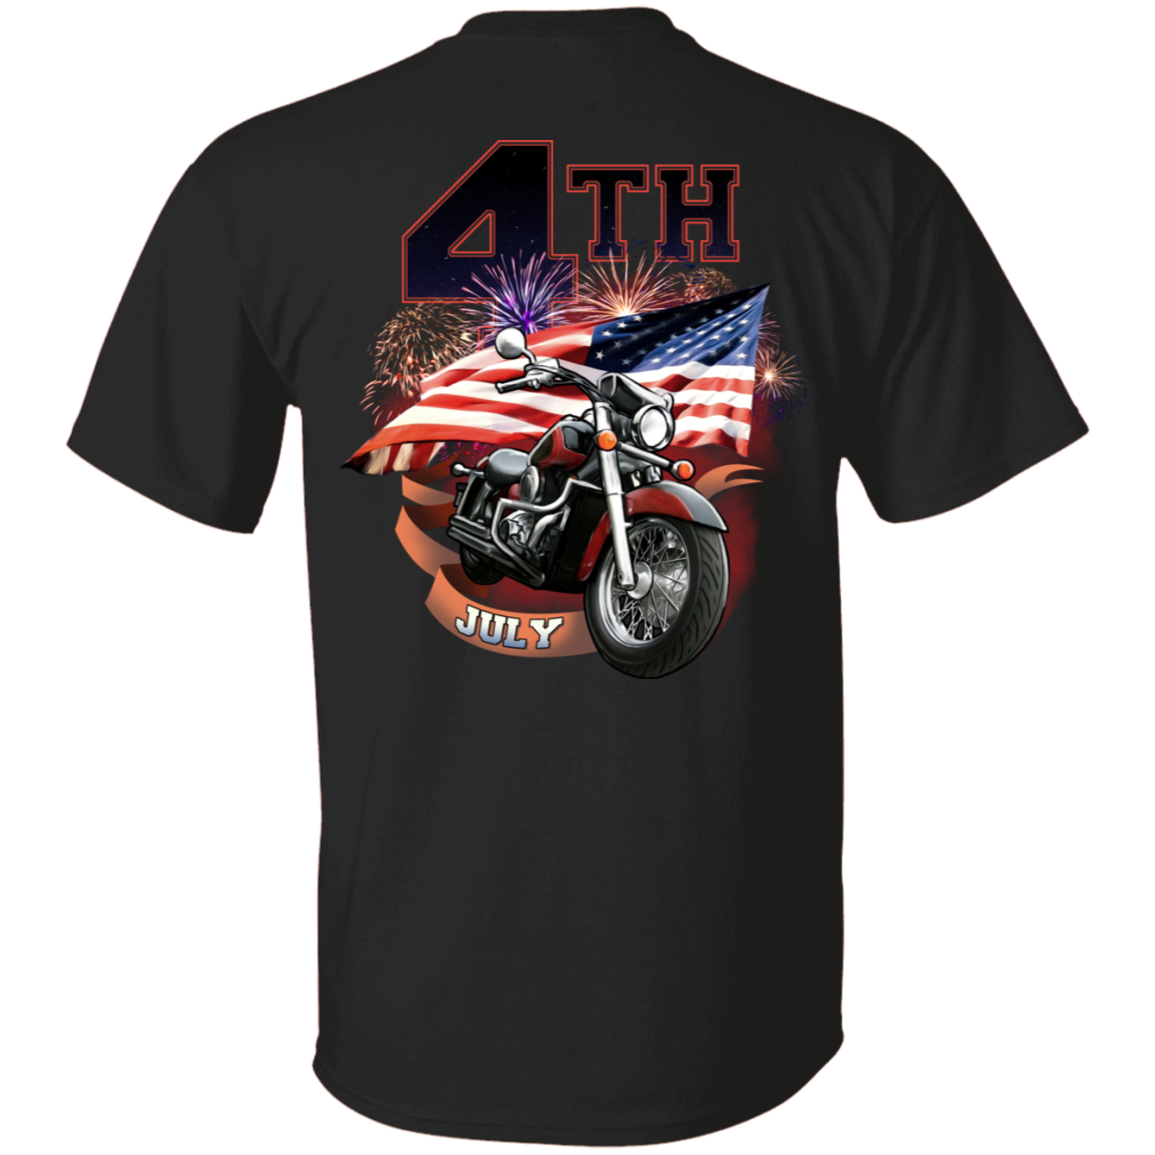 4th of July T-Shirt, Cotton, Black - American Legend Rider